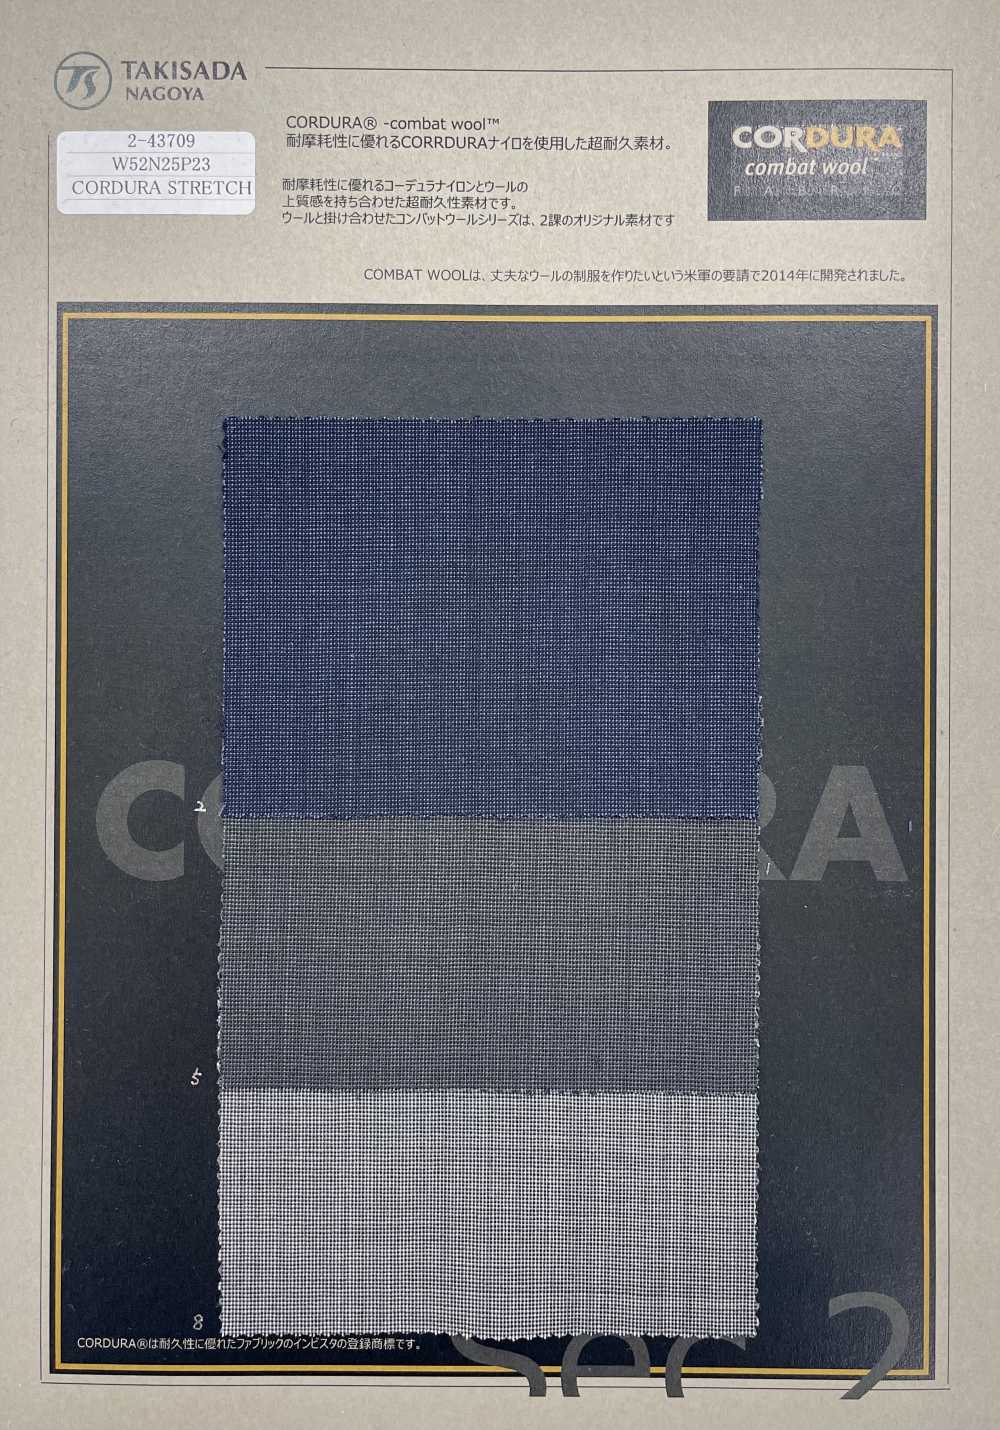 2-43709 Cabeza De Alfiler Tropical CORDURA COMBATWOOL[Fabrica Textil] Takisada Nagoya